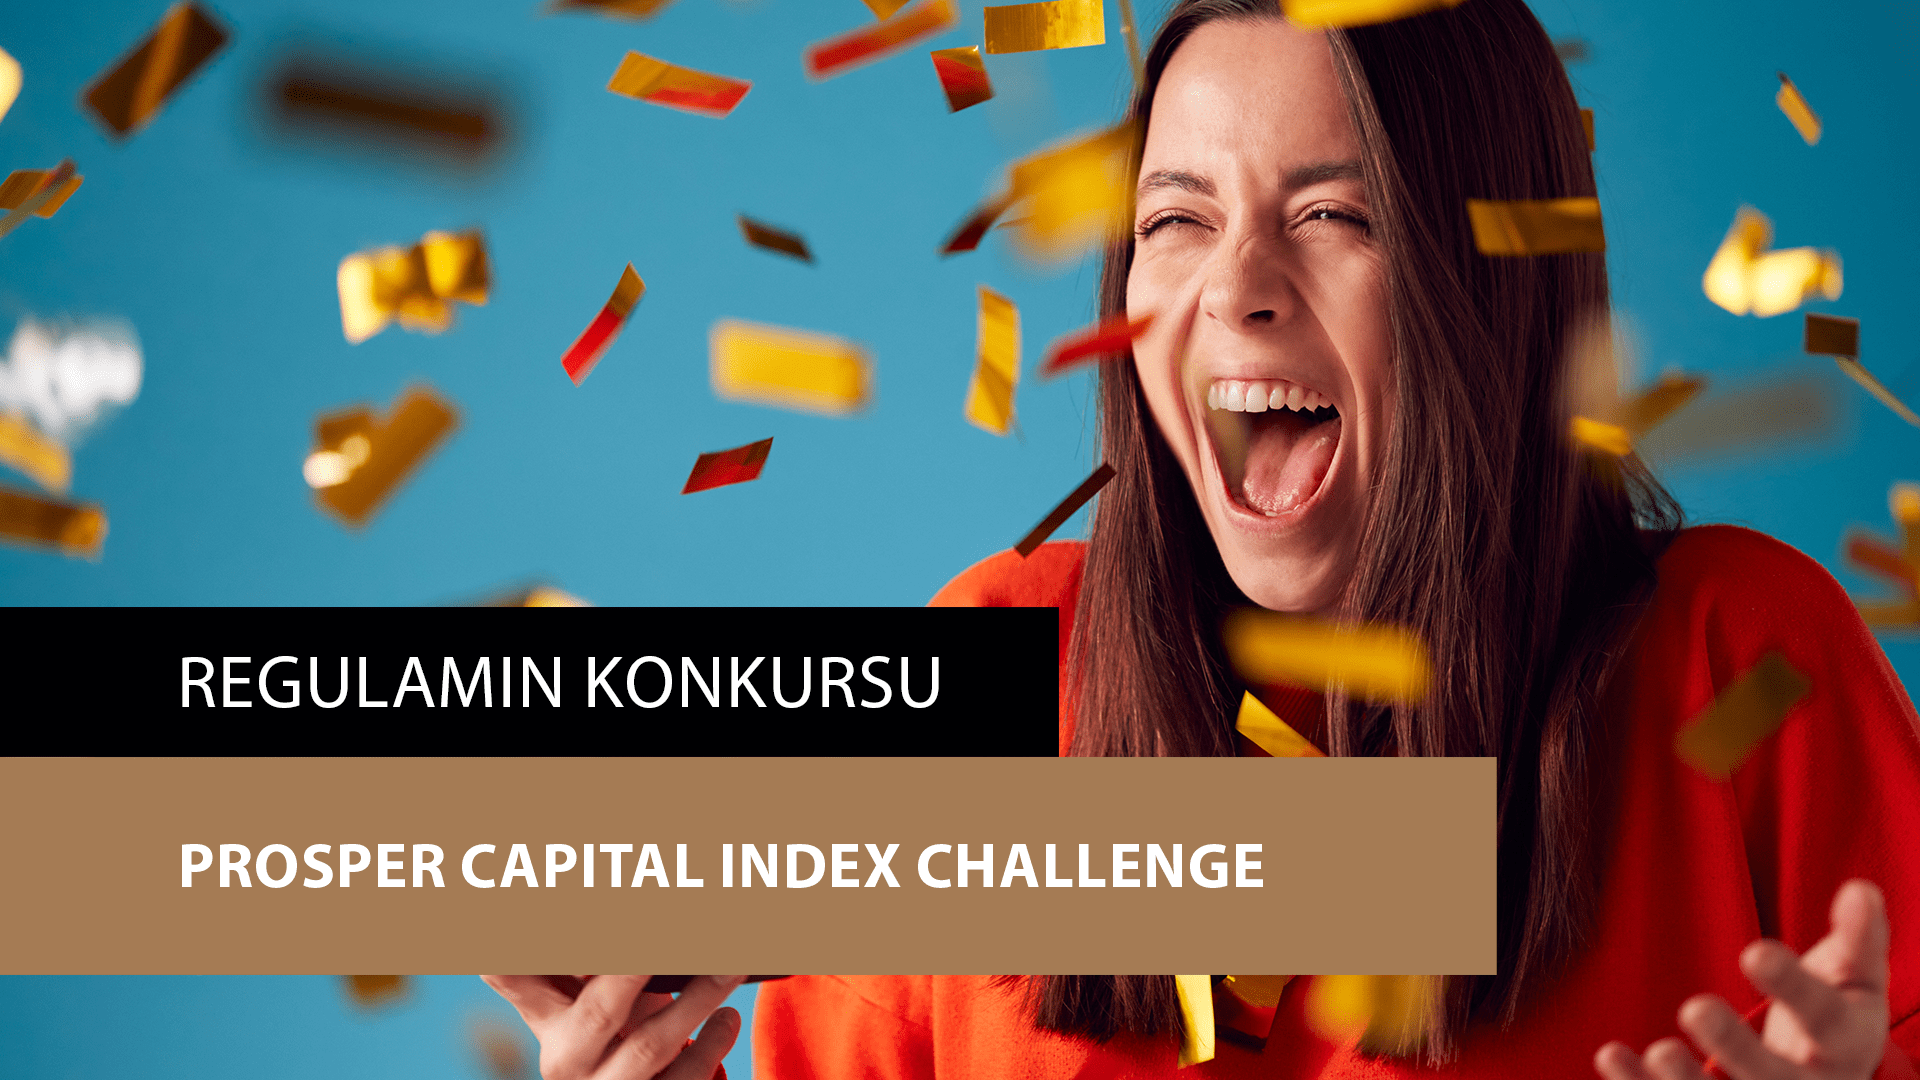 Regulamin konkursu Prosper Capital Index Challenge